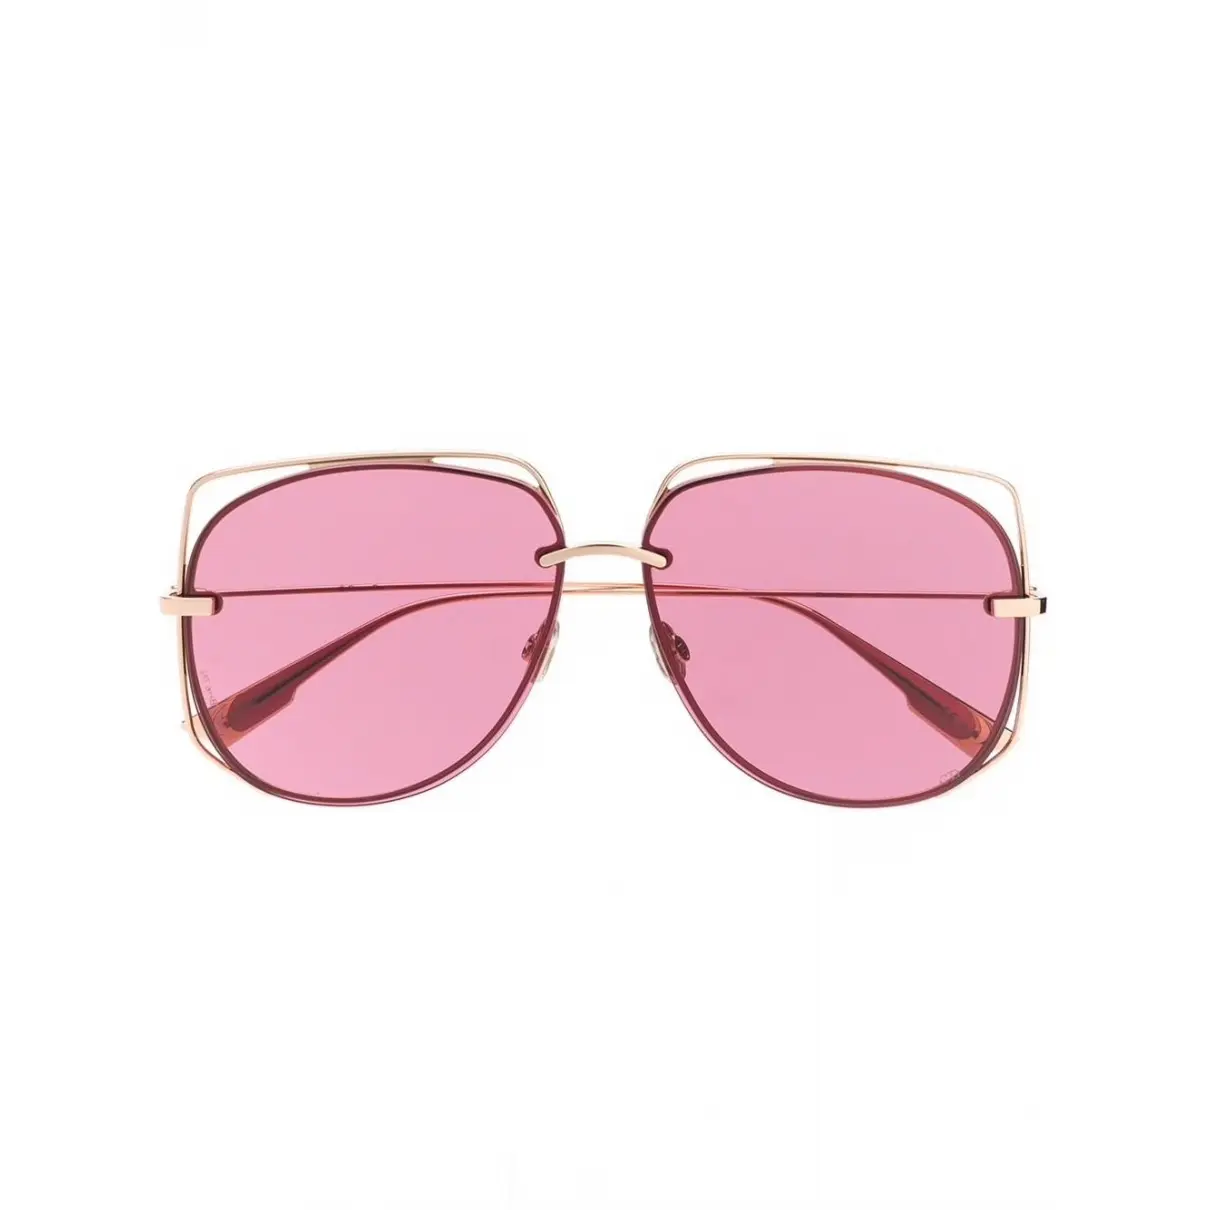 Stellaire 6 aviator sunglasses Dior